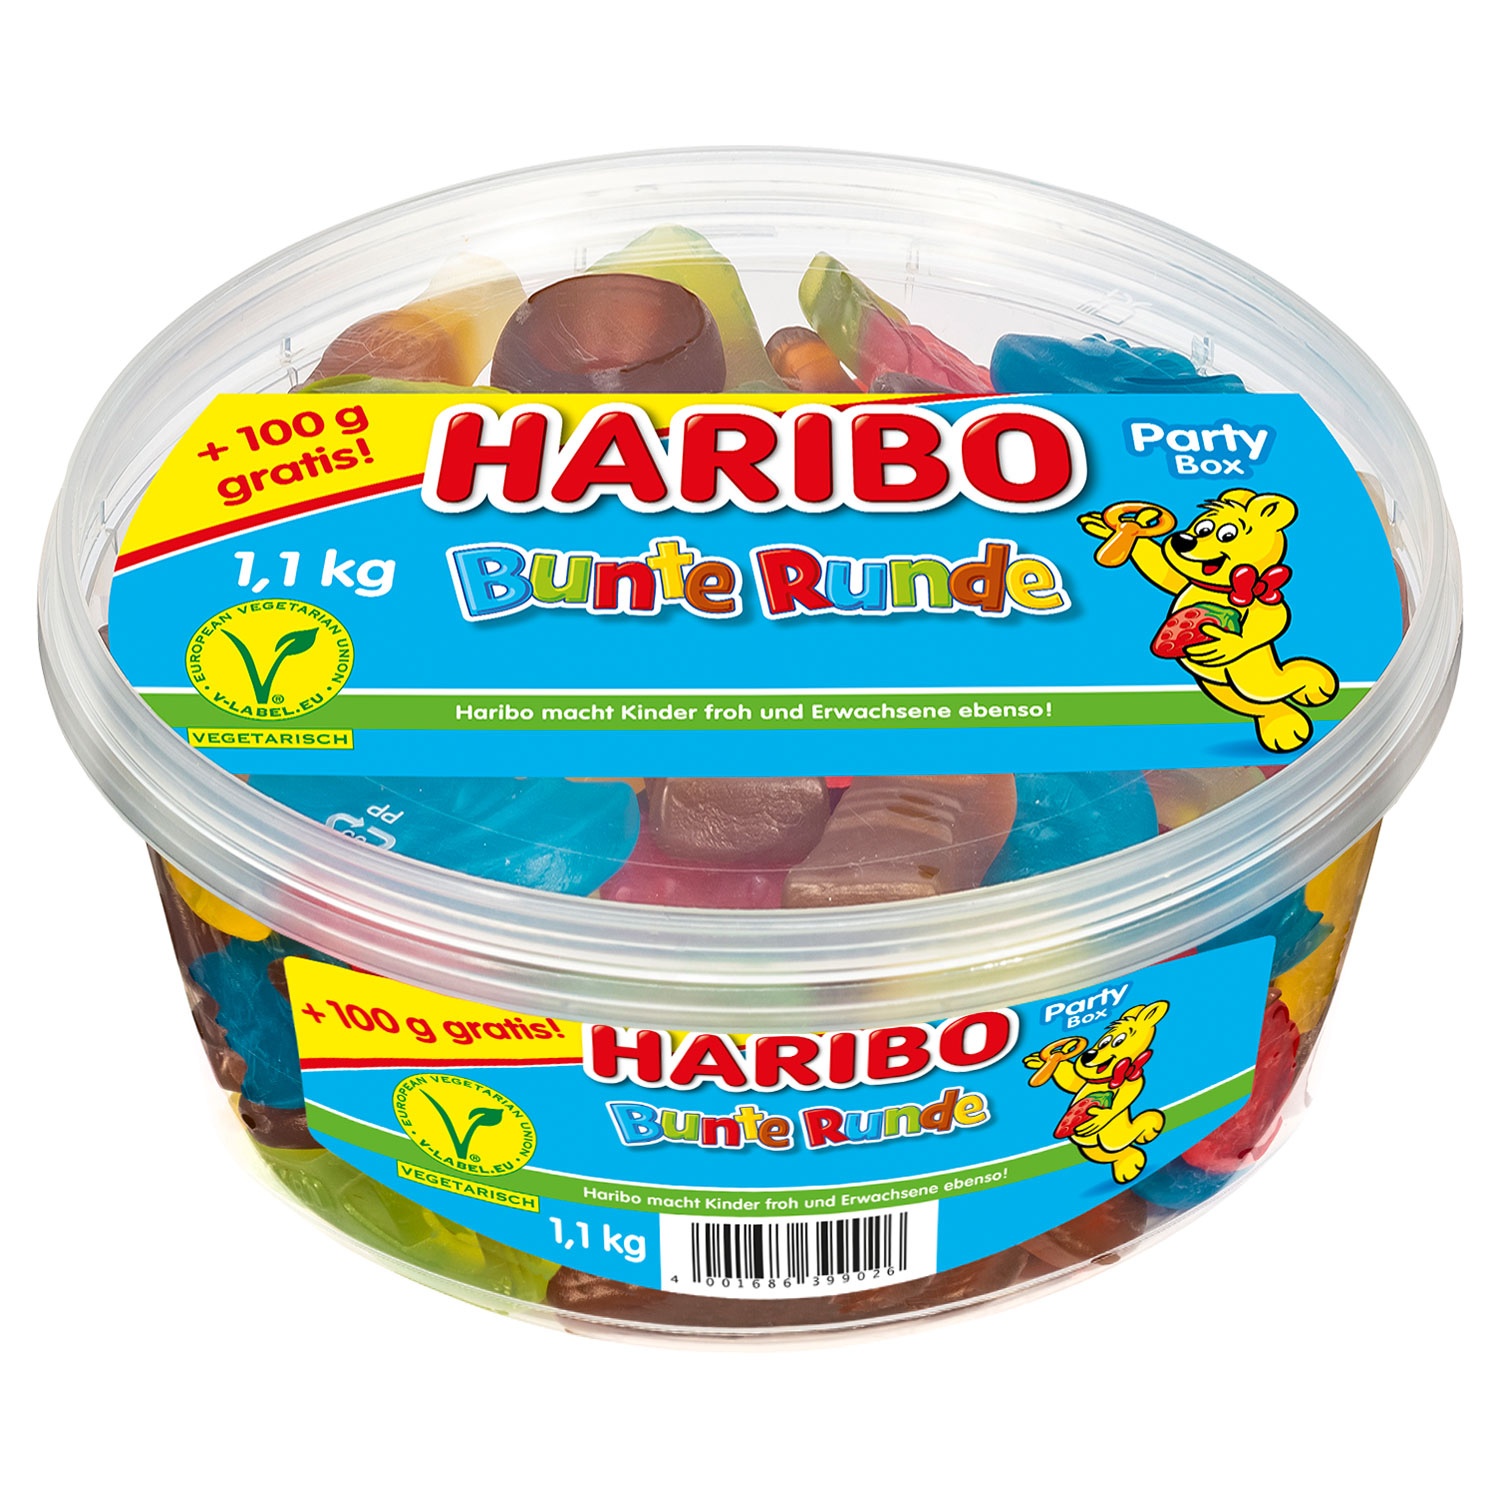 HARIBO Party Box 1,1 kg